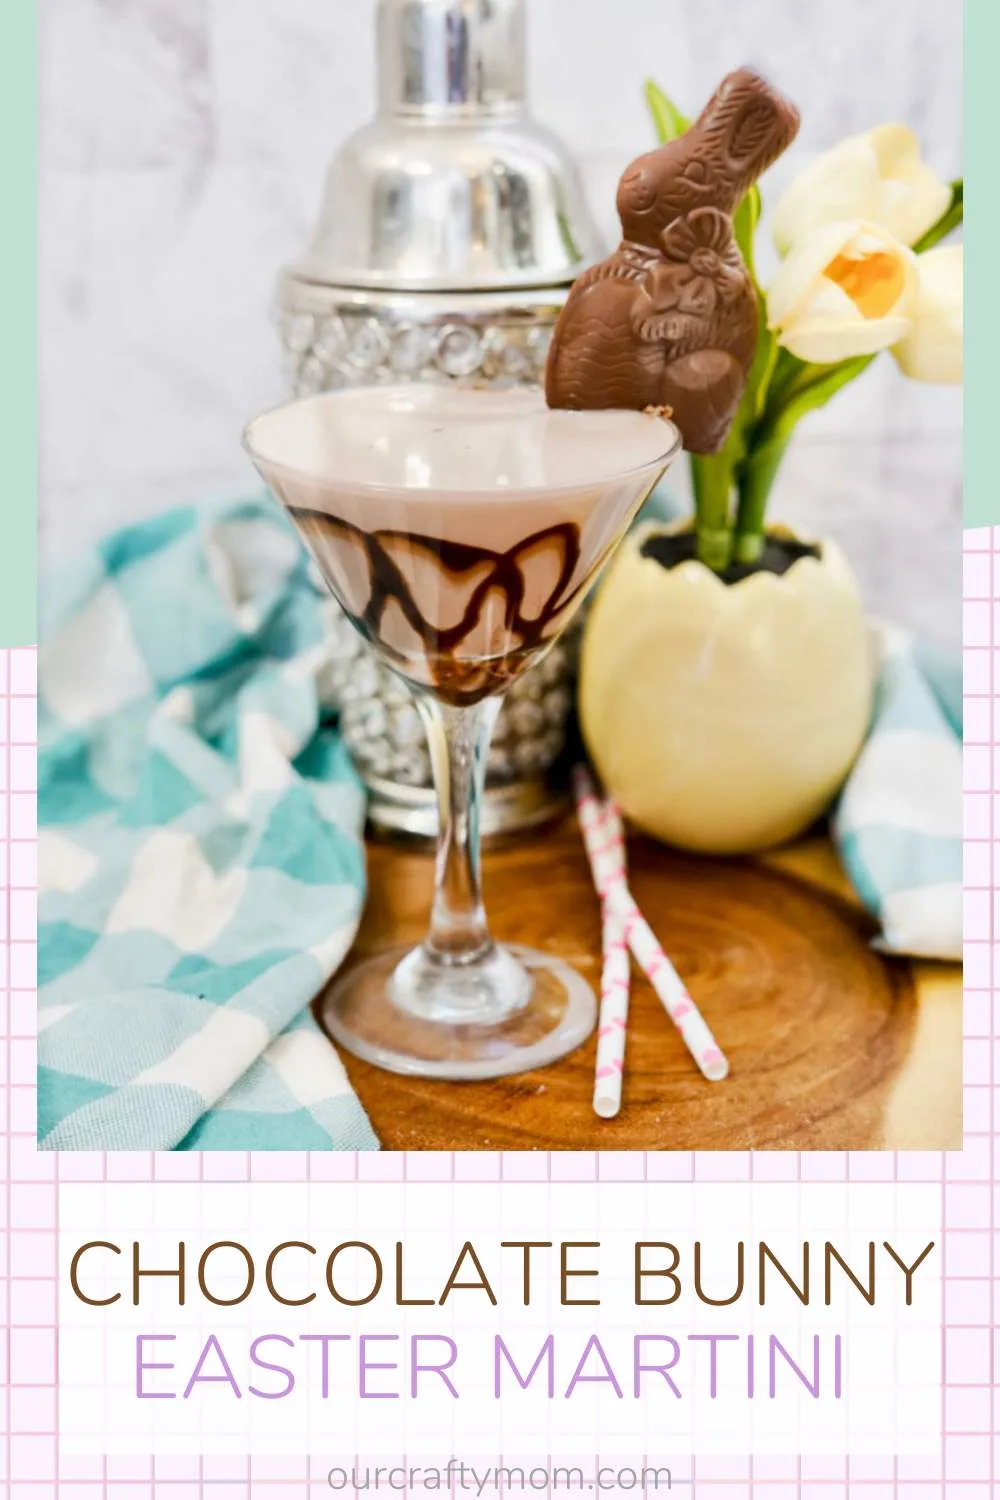 chocolate bunny martini pin image with text